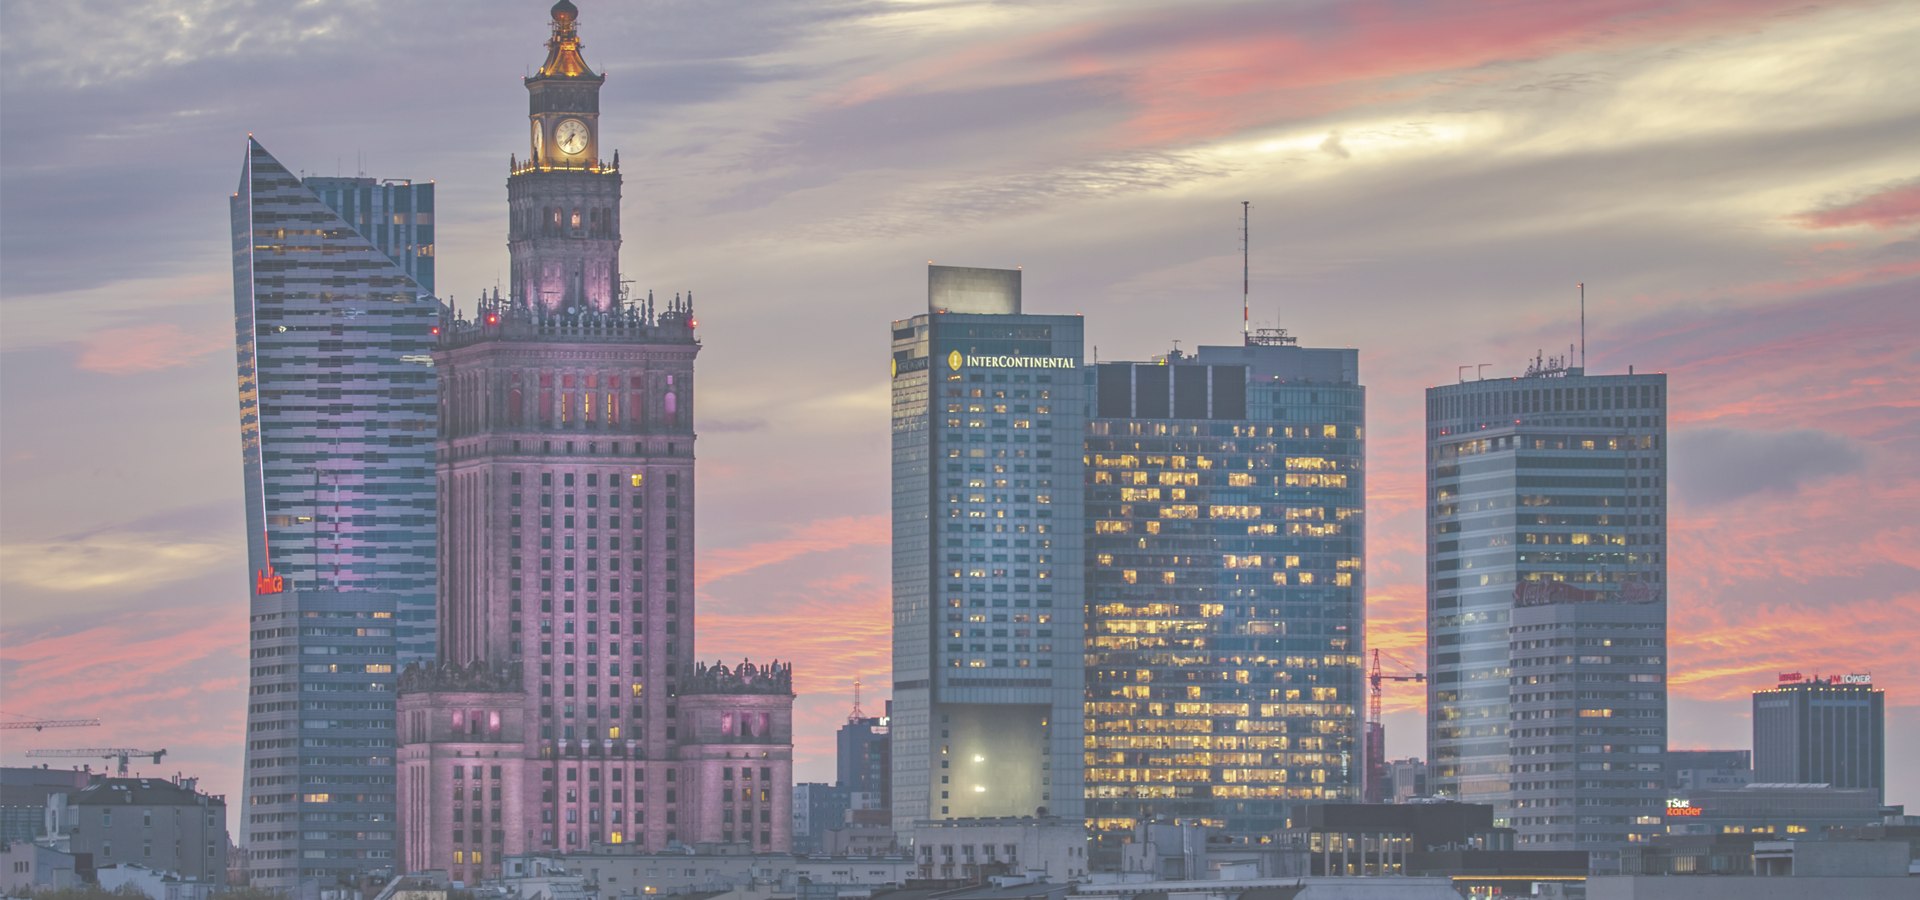 Warsaw Time